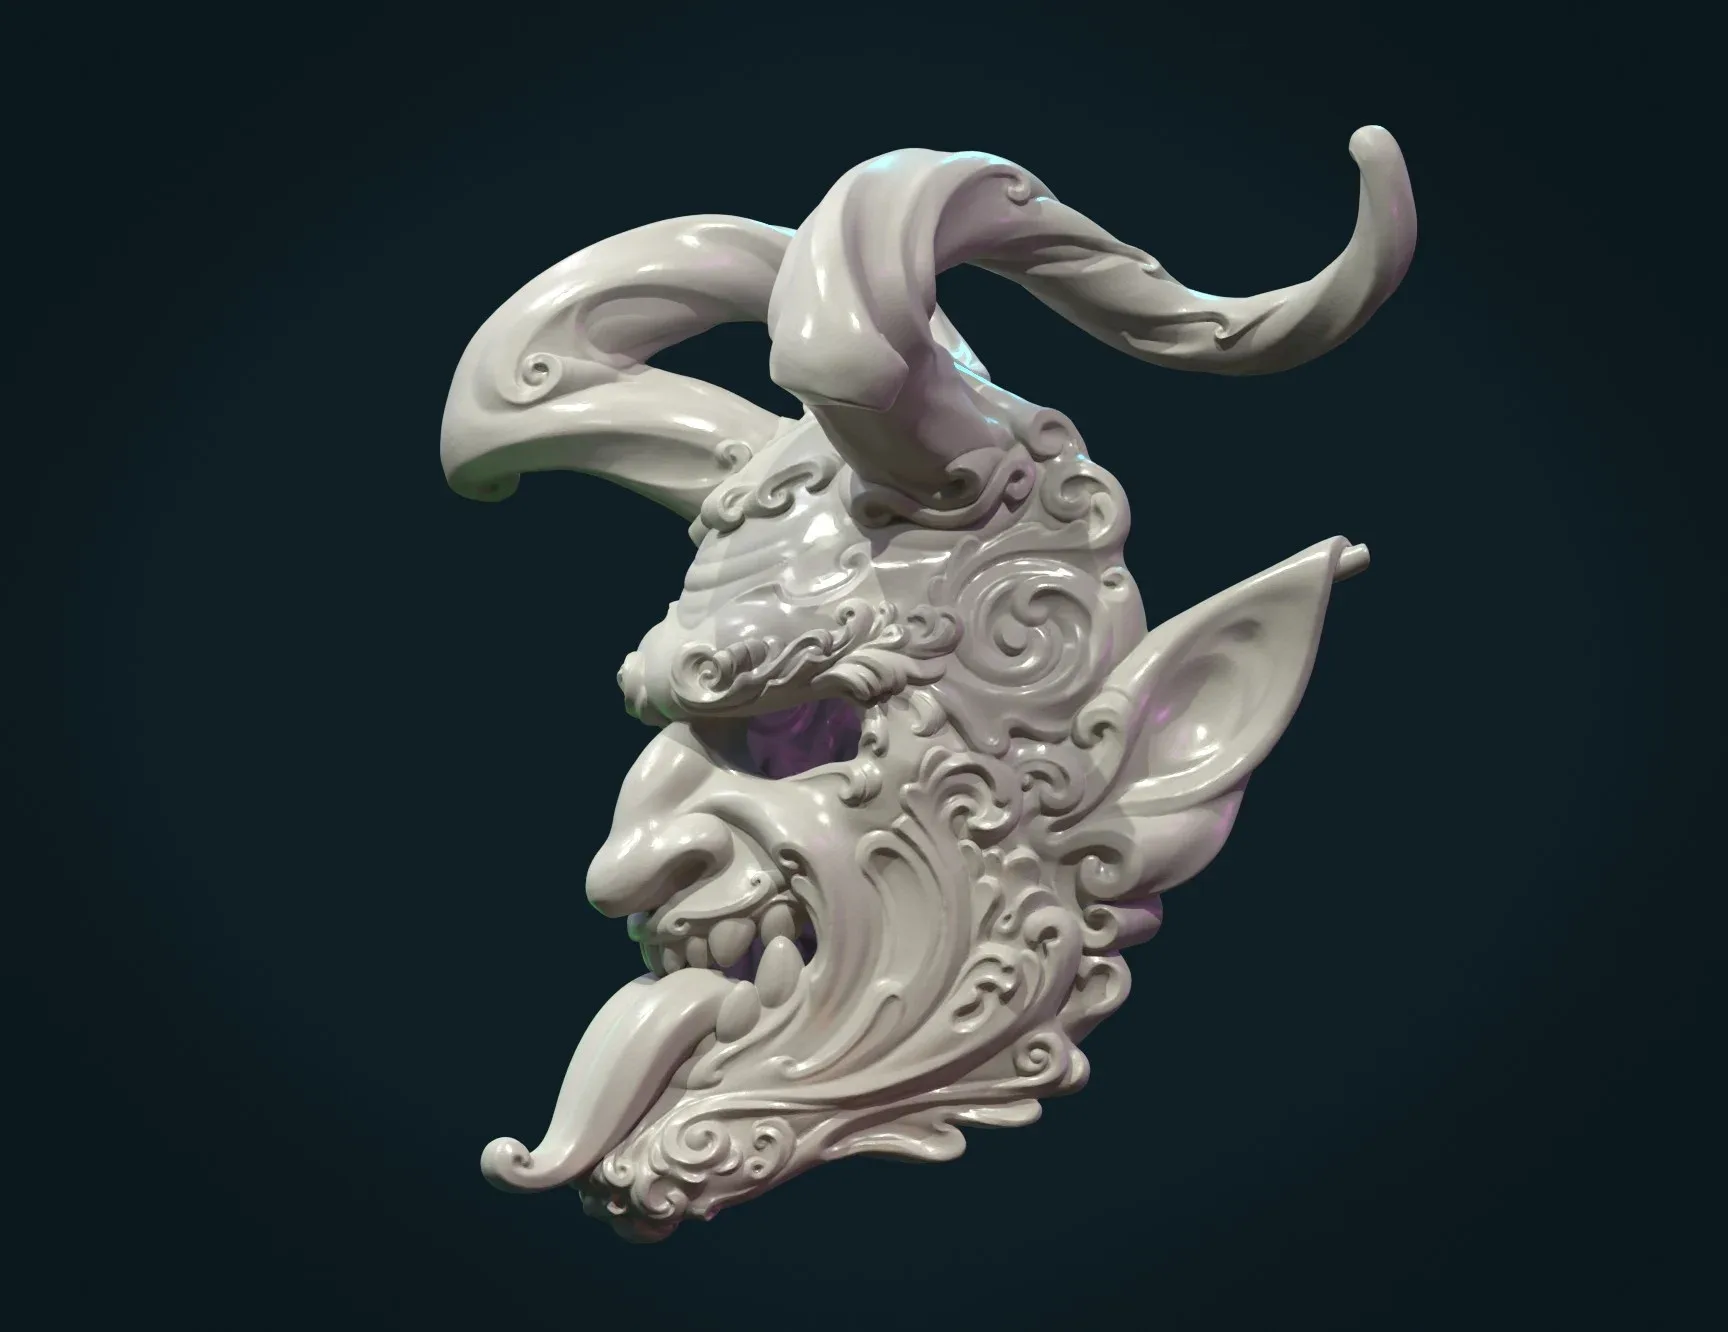 Demon Satyr Mask - 3D Print Ready